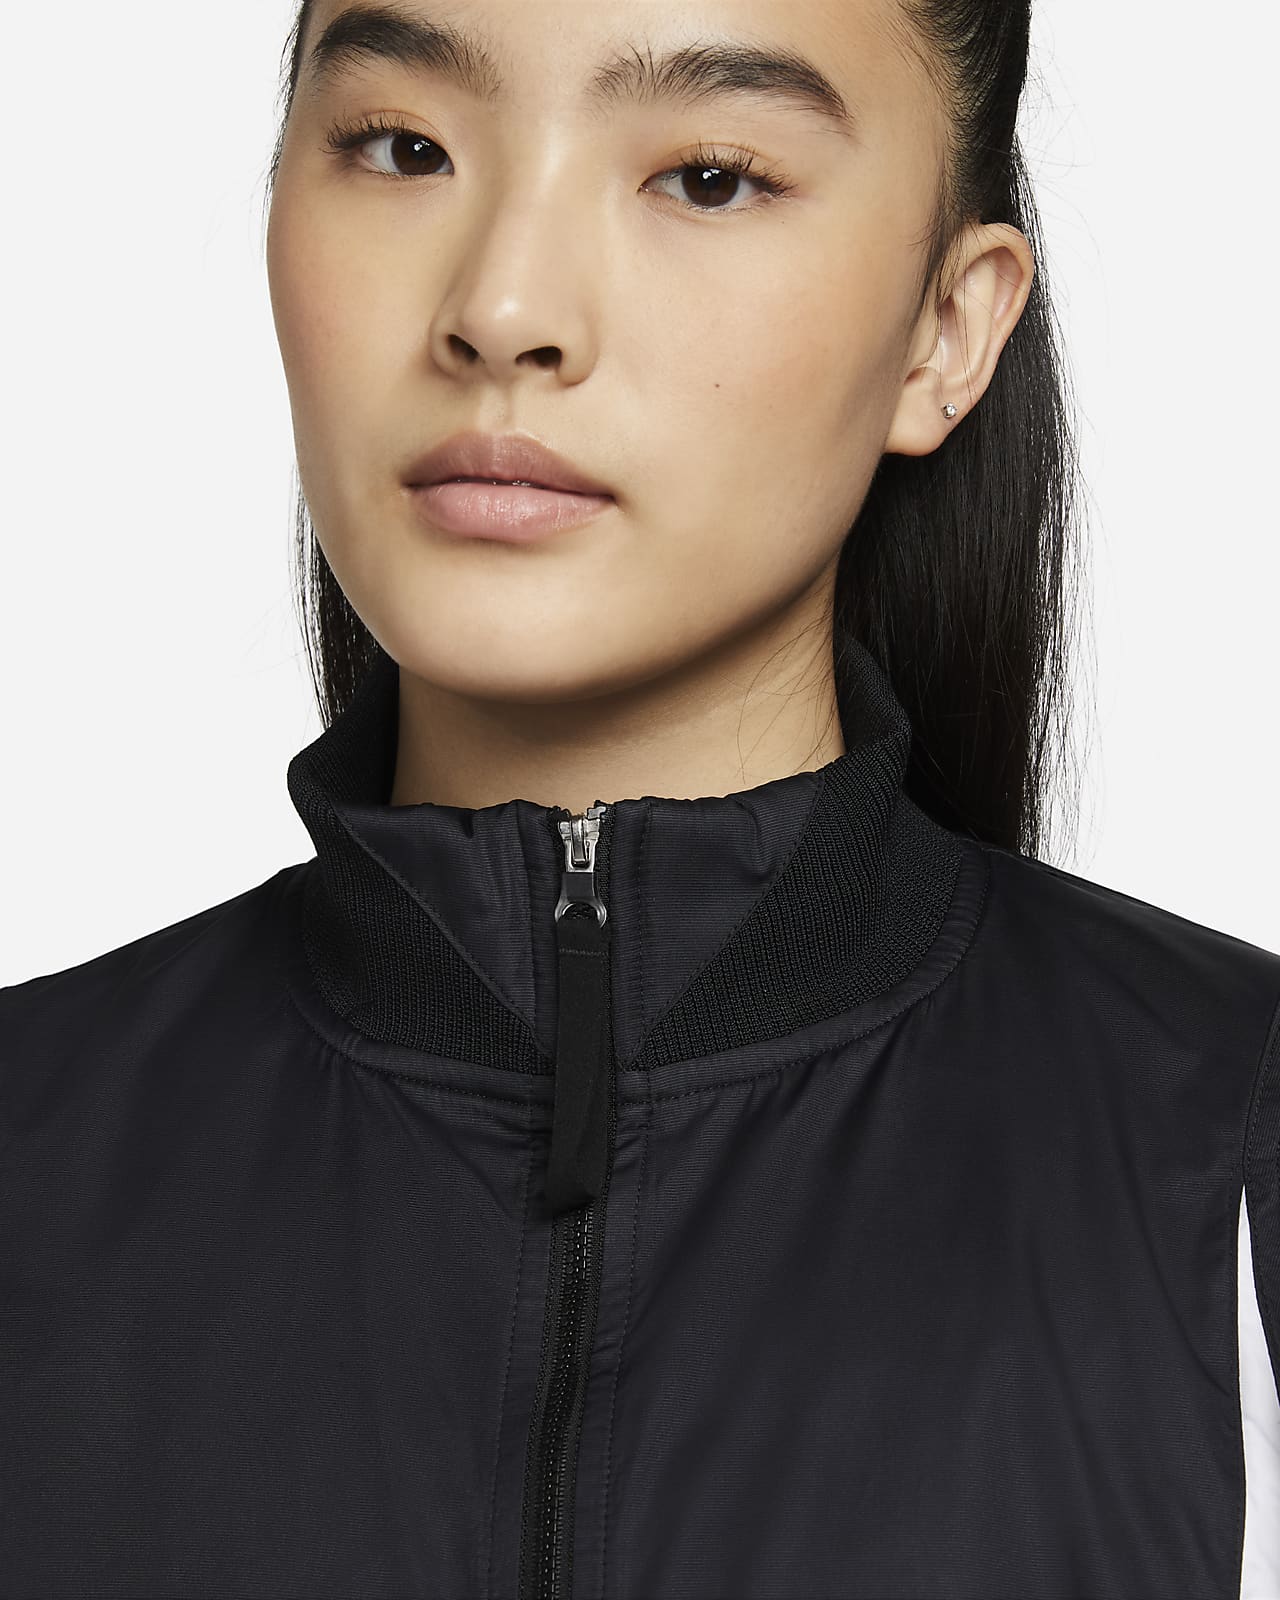 Nike Sportswear Women's Woven Air Max Day Jacket. Nike SG